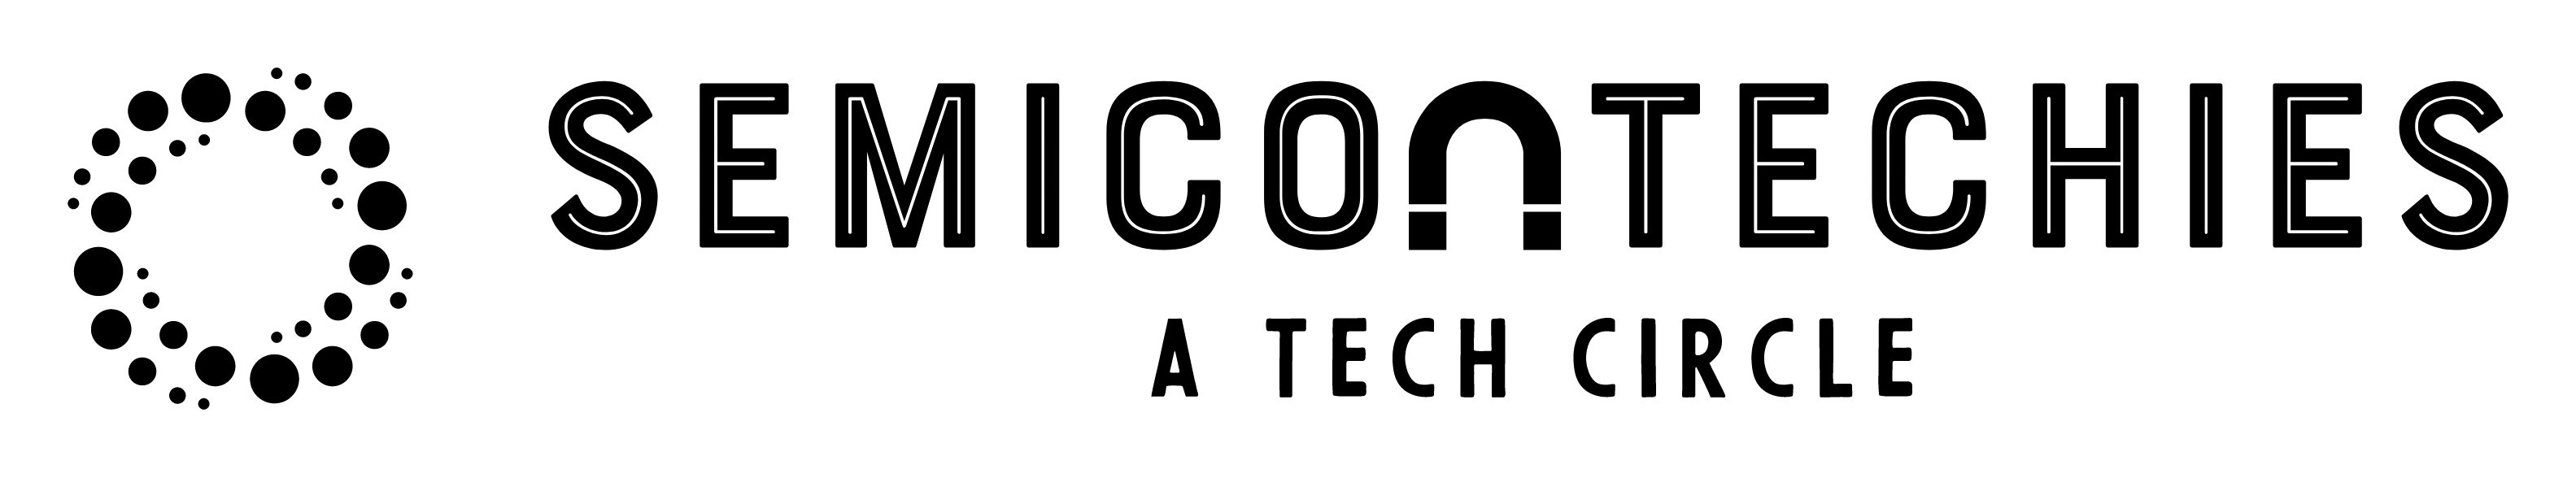 semicontechies-logo-black